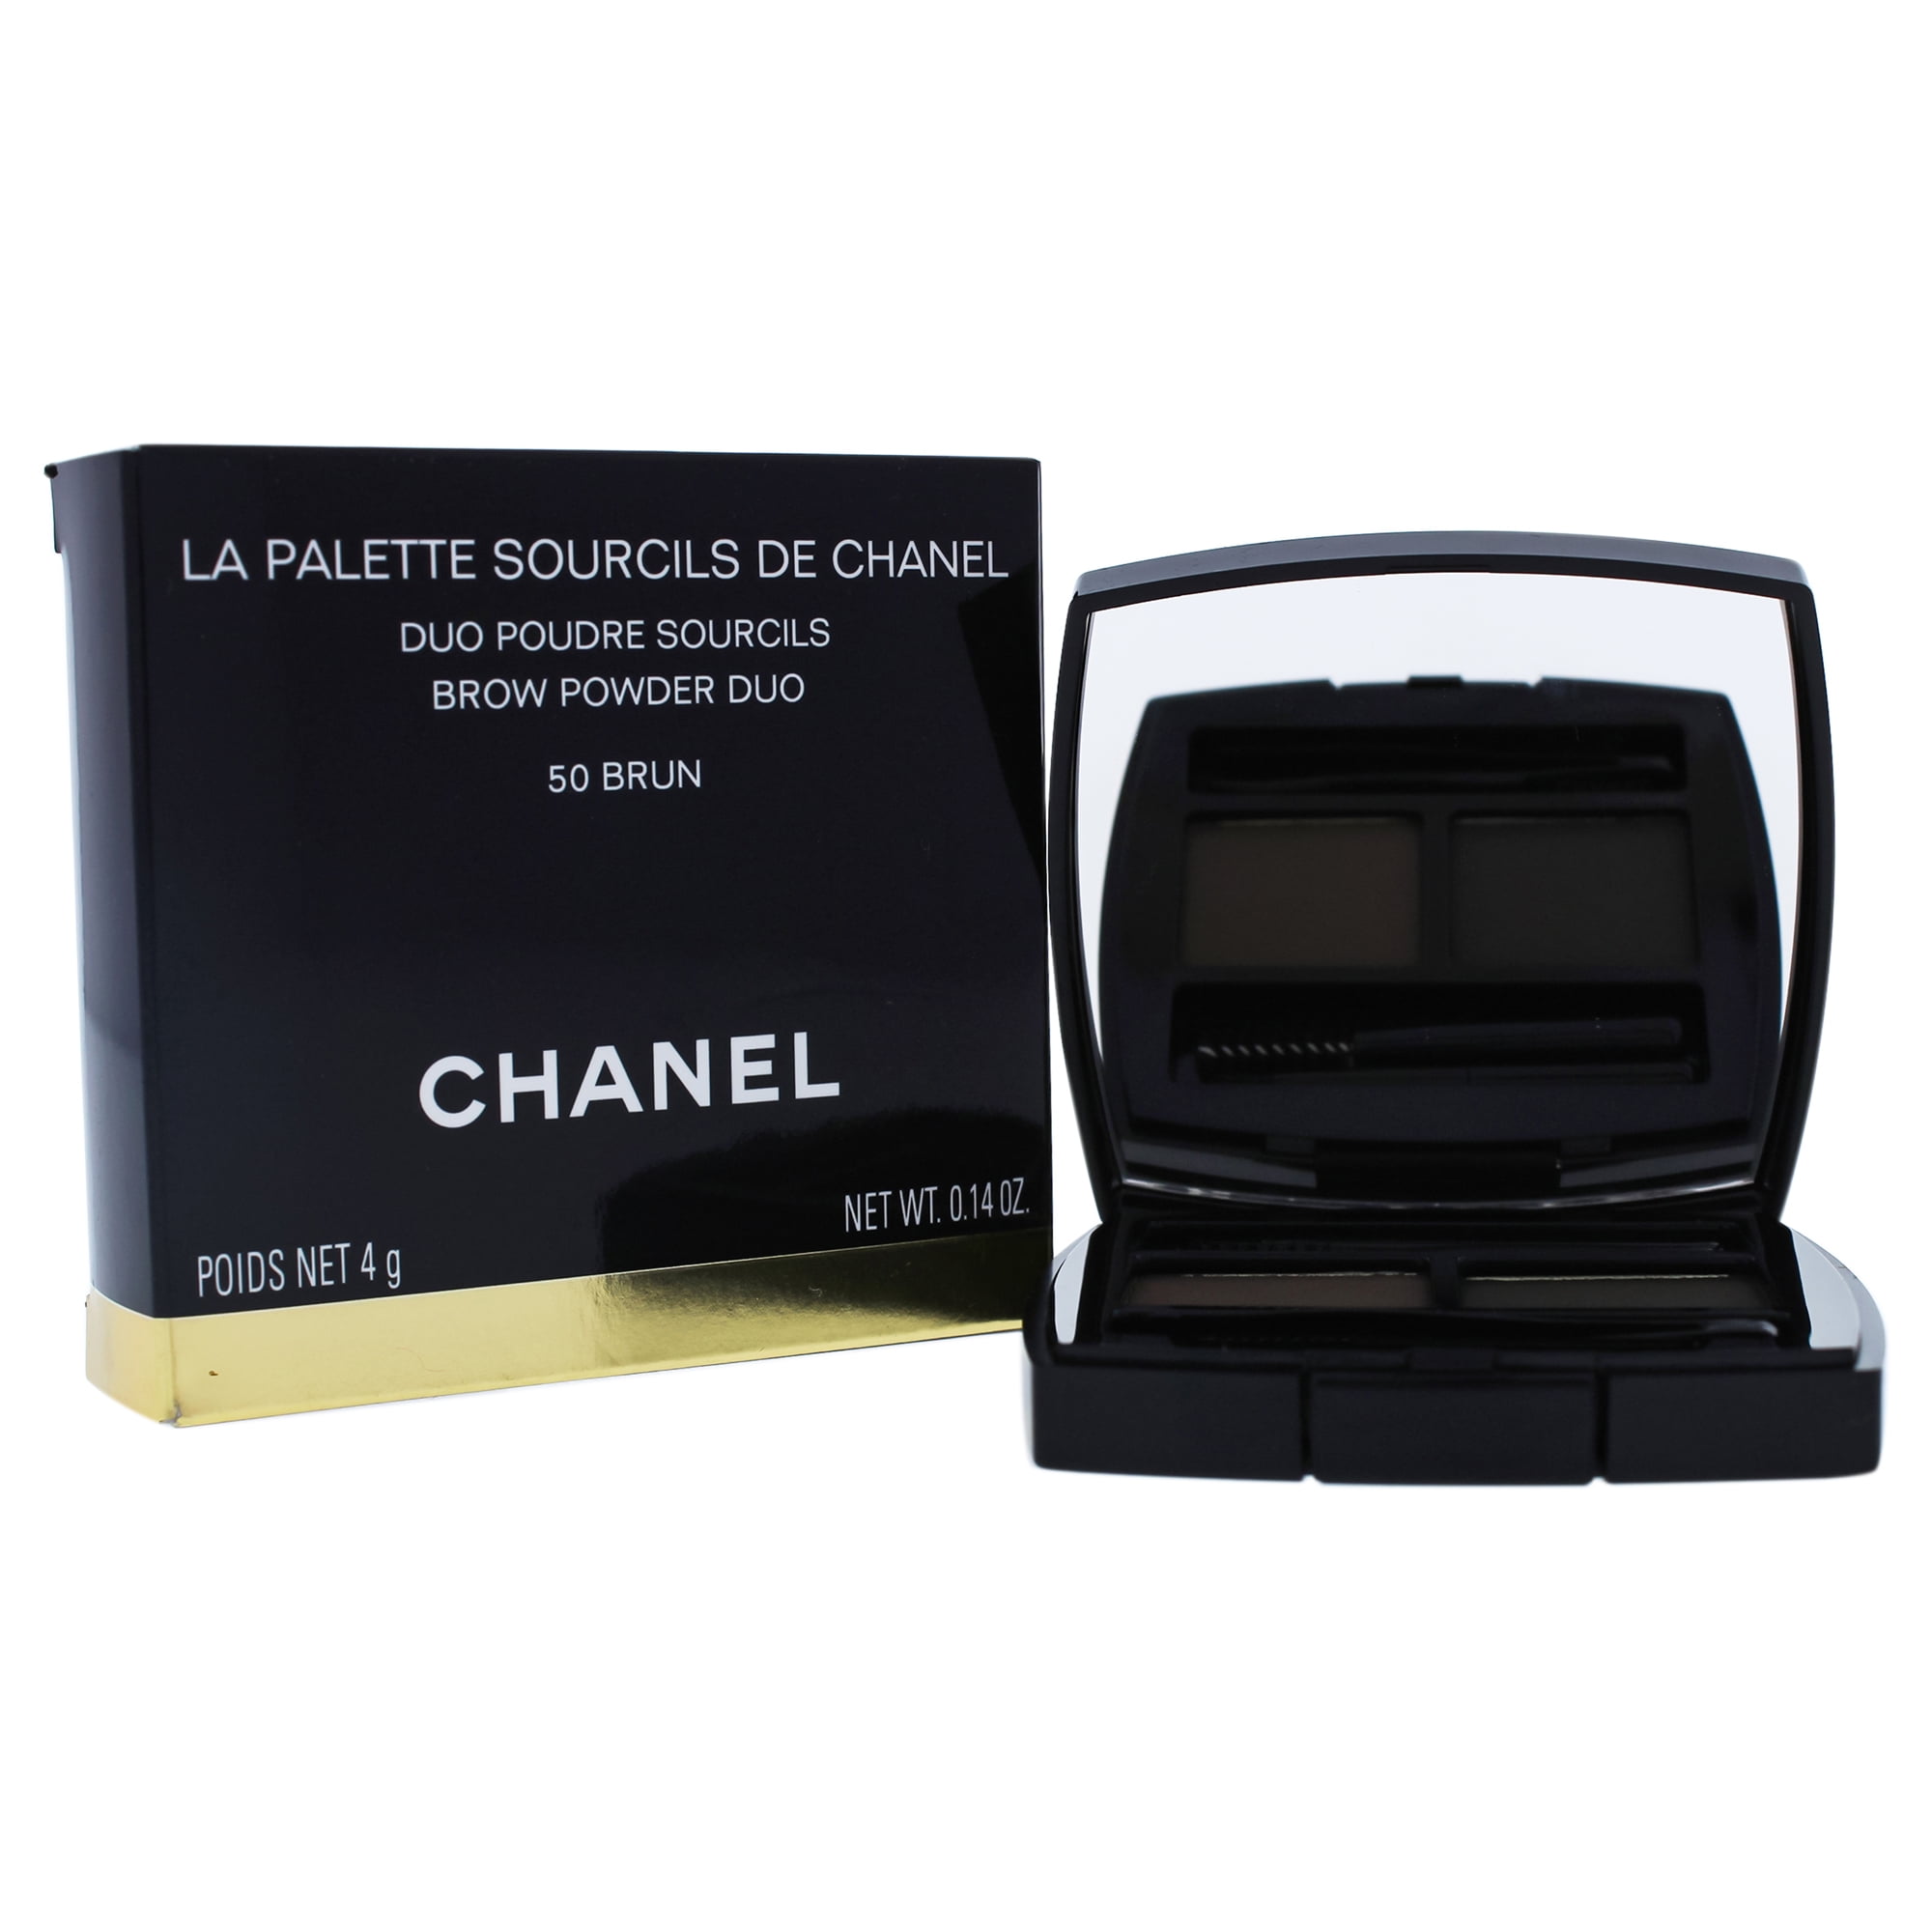 La Palette Sourcils De Chanel Brow Powder Duo - 50 Brun by Chanel for Women  - 0.14 oz Powder